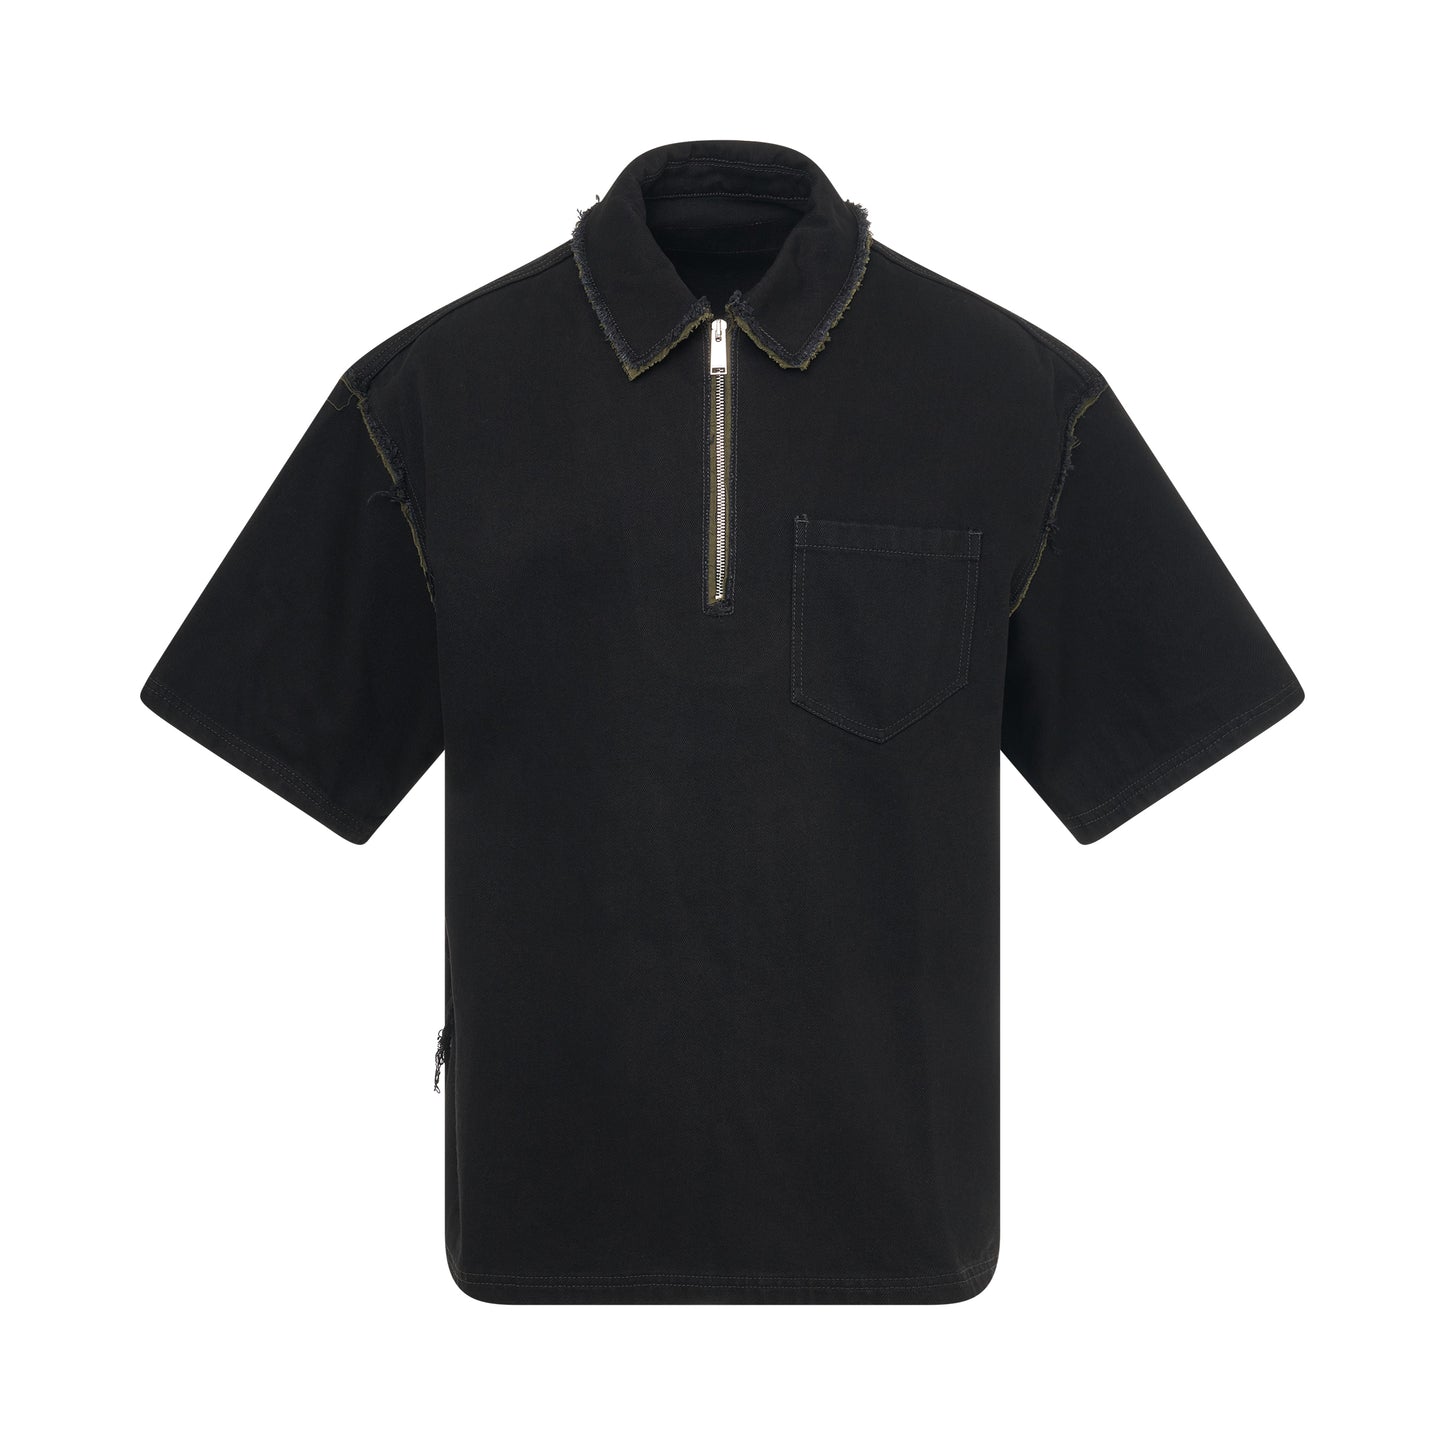 Rebuilt Denim Short Sleeve Zip Shirt in Black